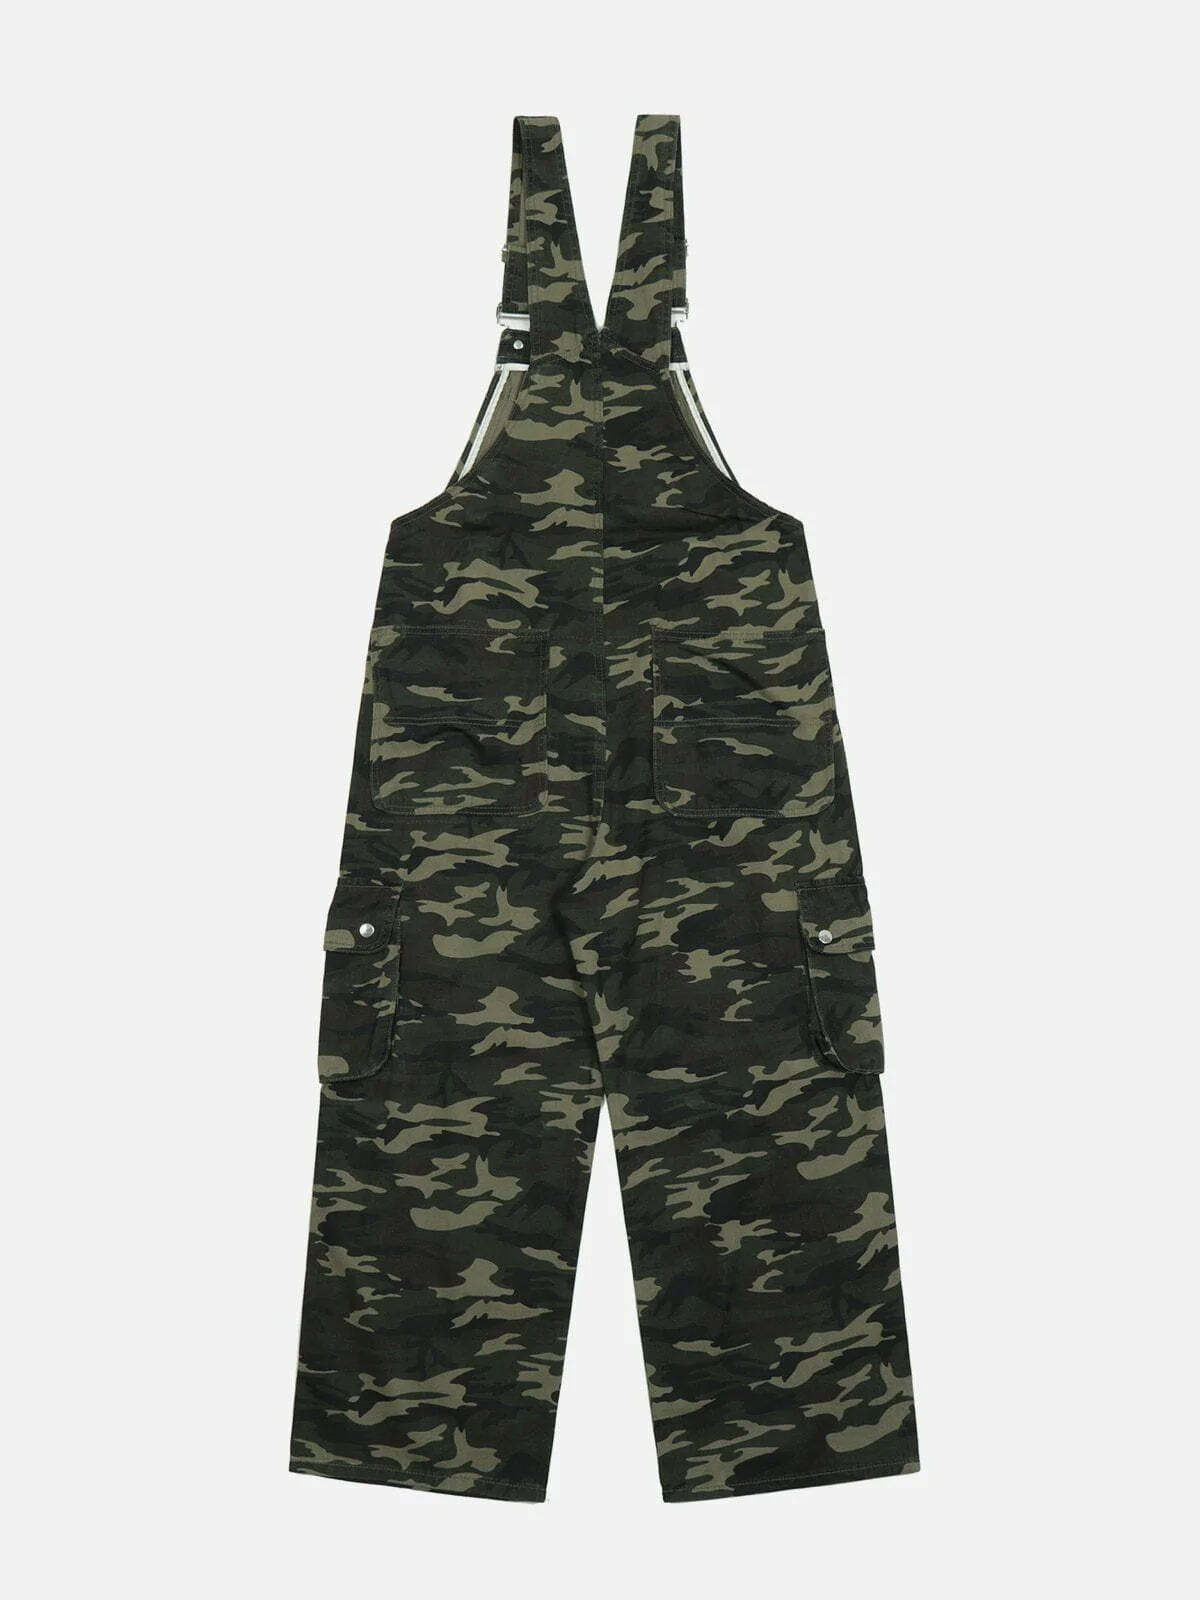 camouflage cargo pants edgy & urban streetwear 2232